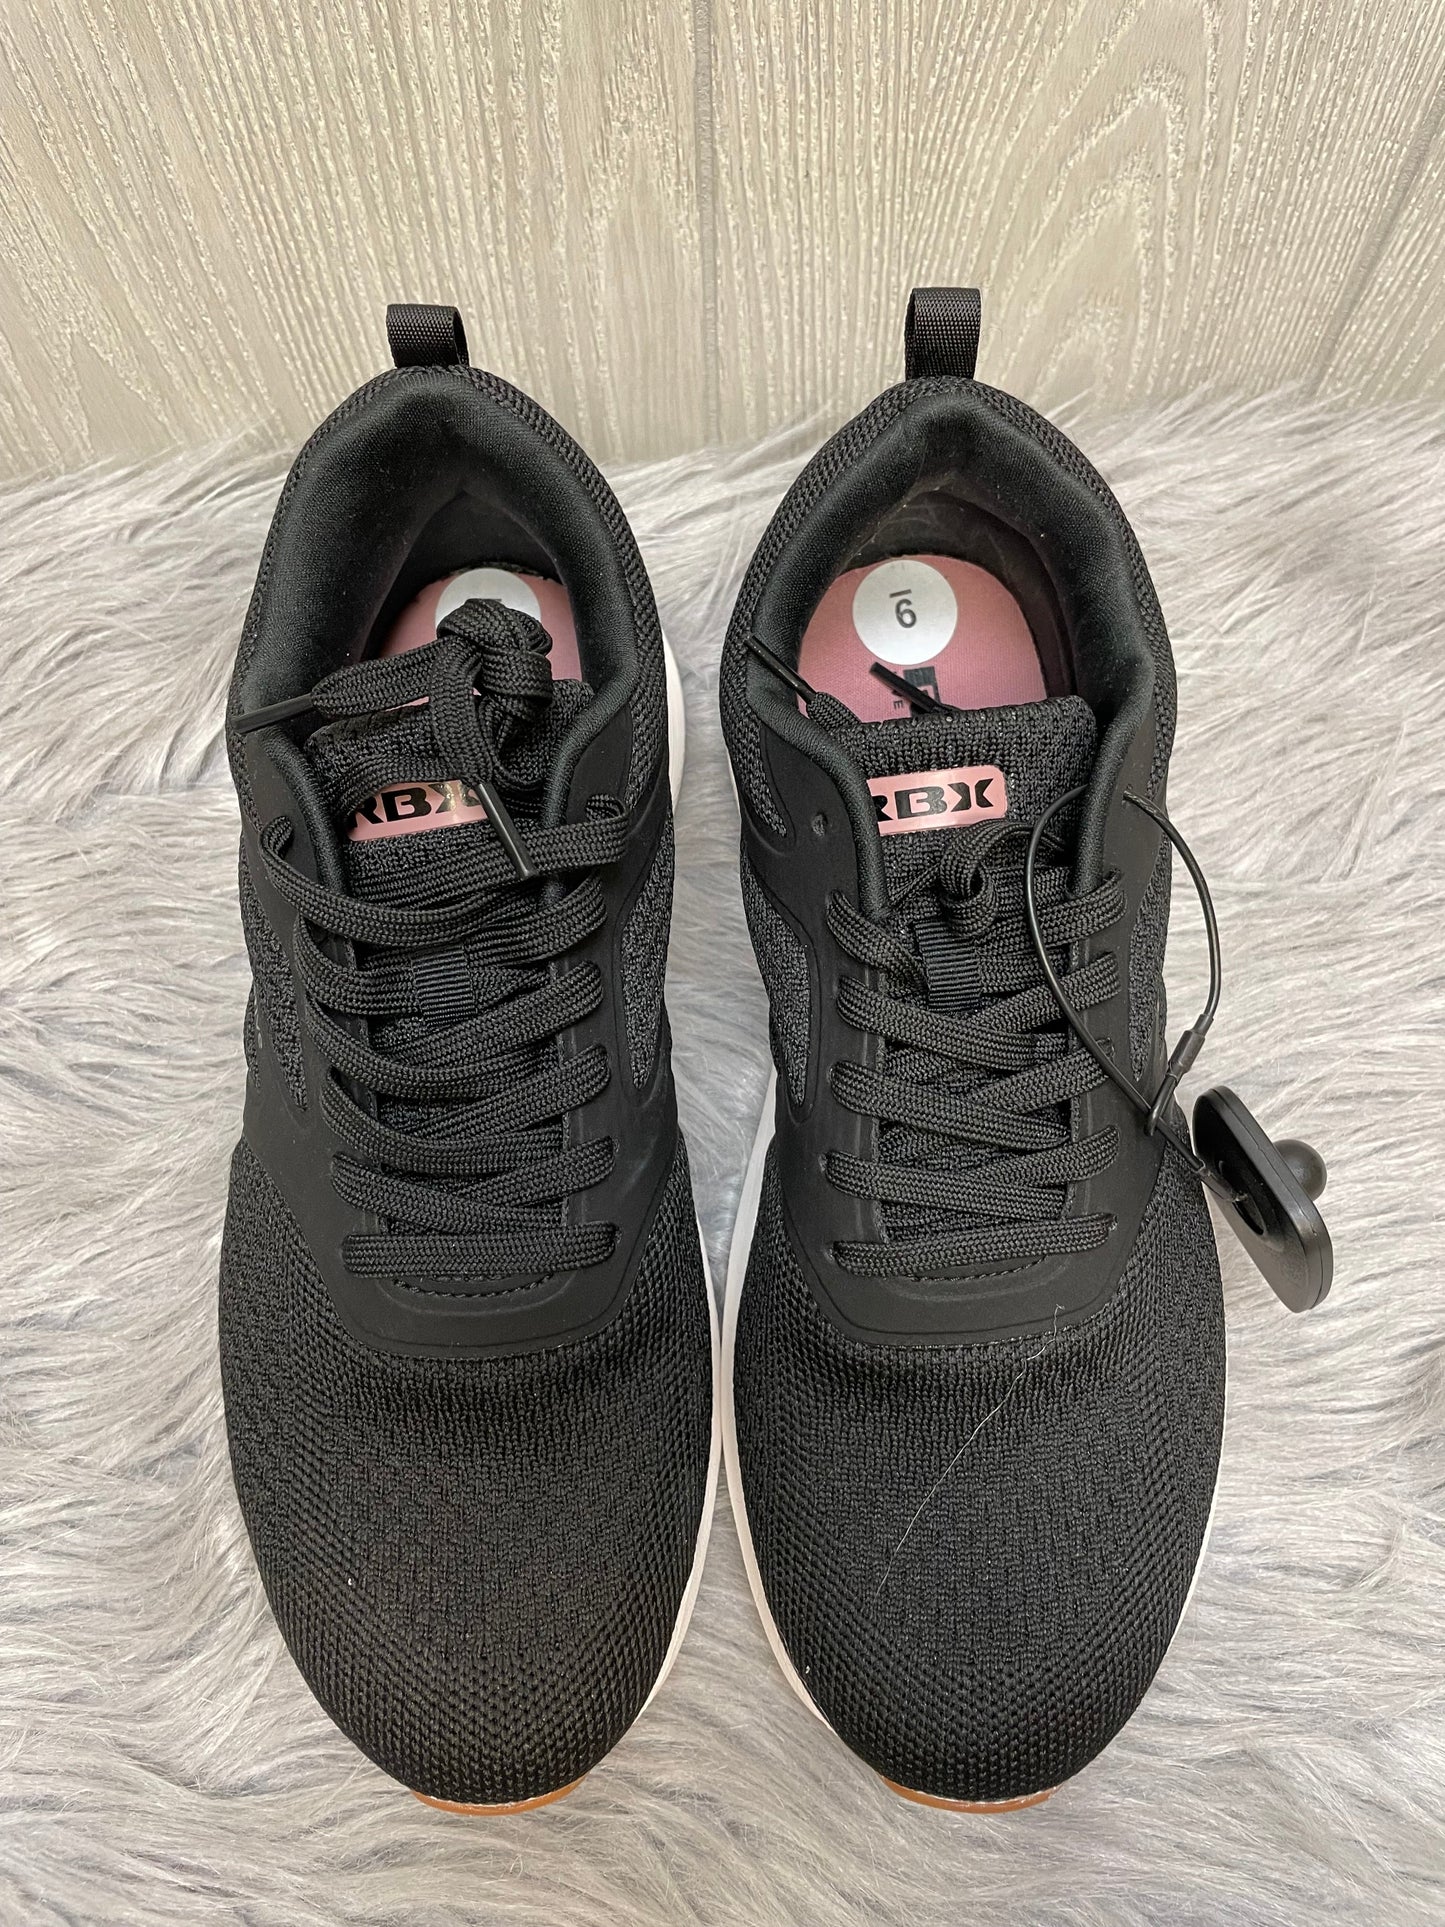 Black Shoes Athletic Rbx, Size 9